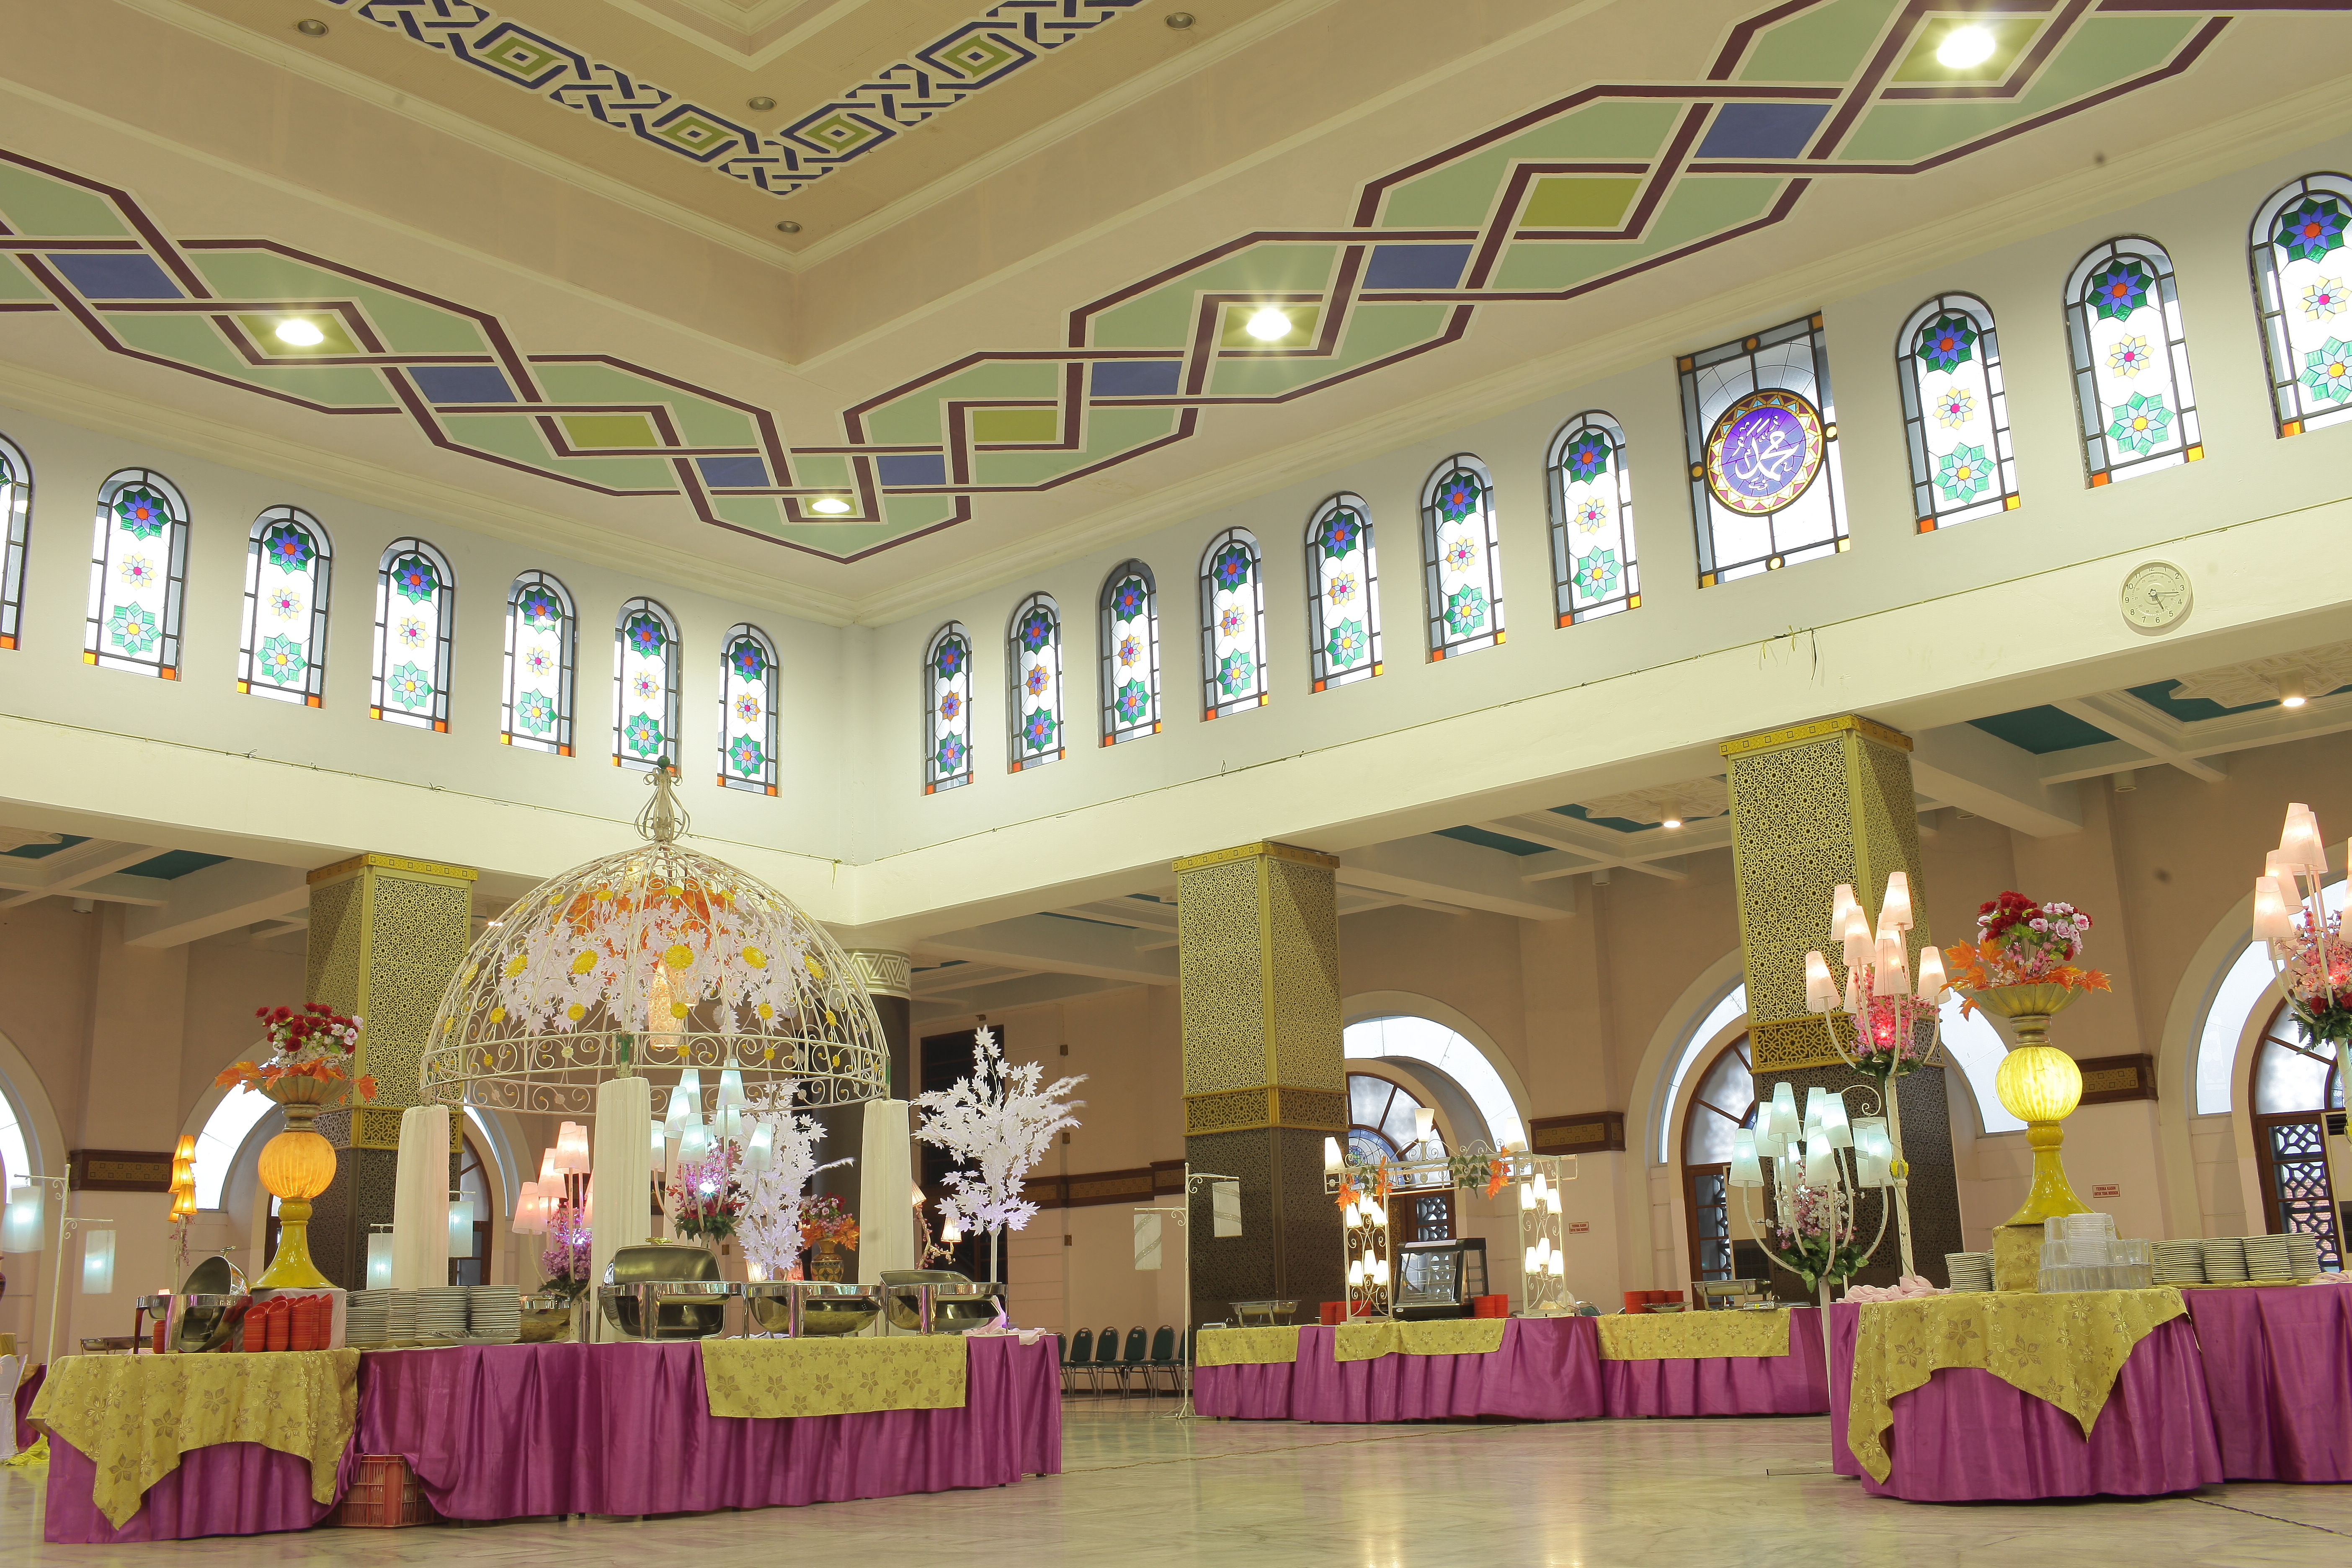 Harga Sewa Gedung Pernikahan Masjid Agung Surabaya 